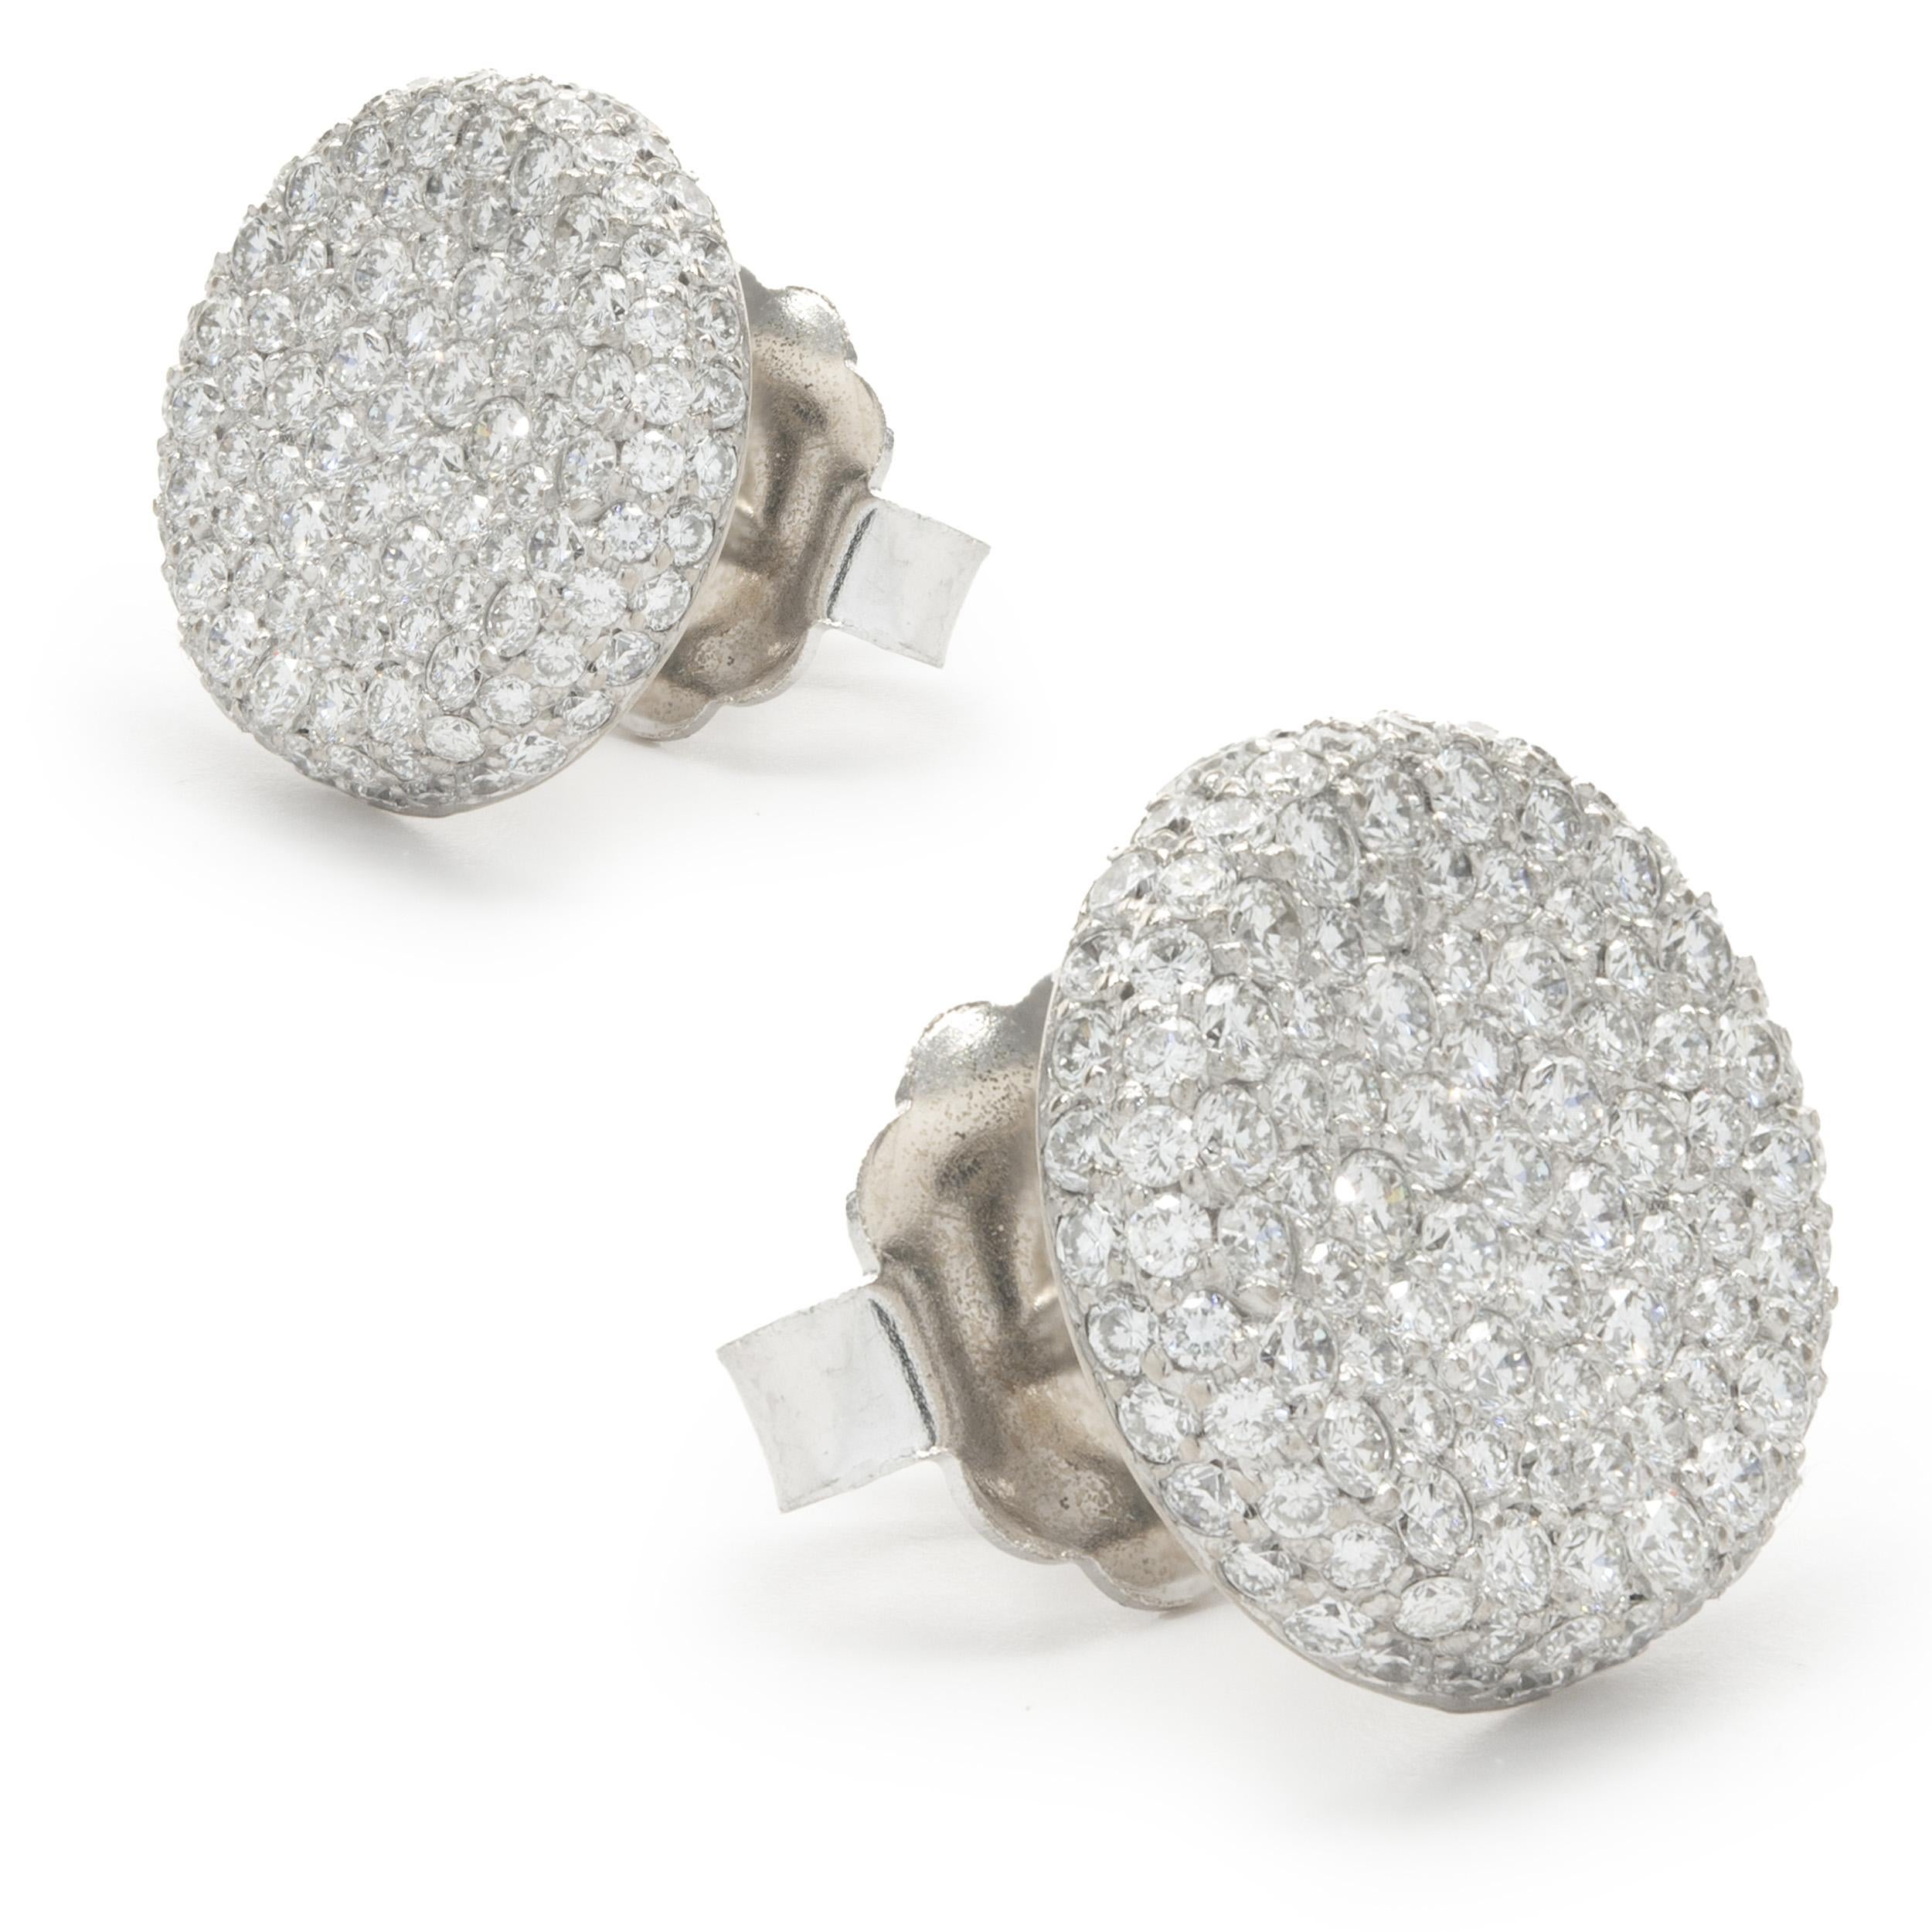 Designer: custom design
Material: 18K white gold
Diamonds: round brilliant cut= 2.82cttw
Color: G
Clarity: VS2
Dimensions: earrings measure 13.5mm long
Weight: 6.22 grams
